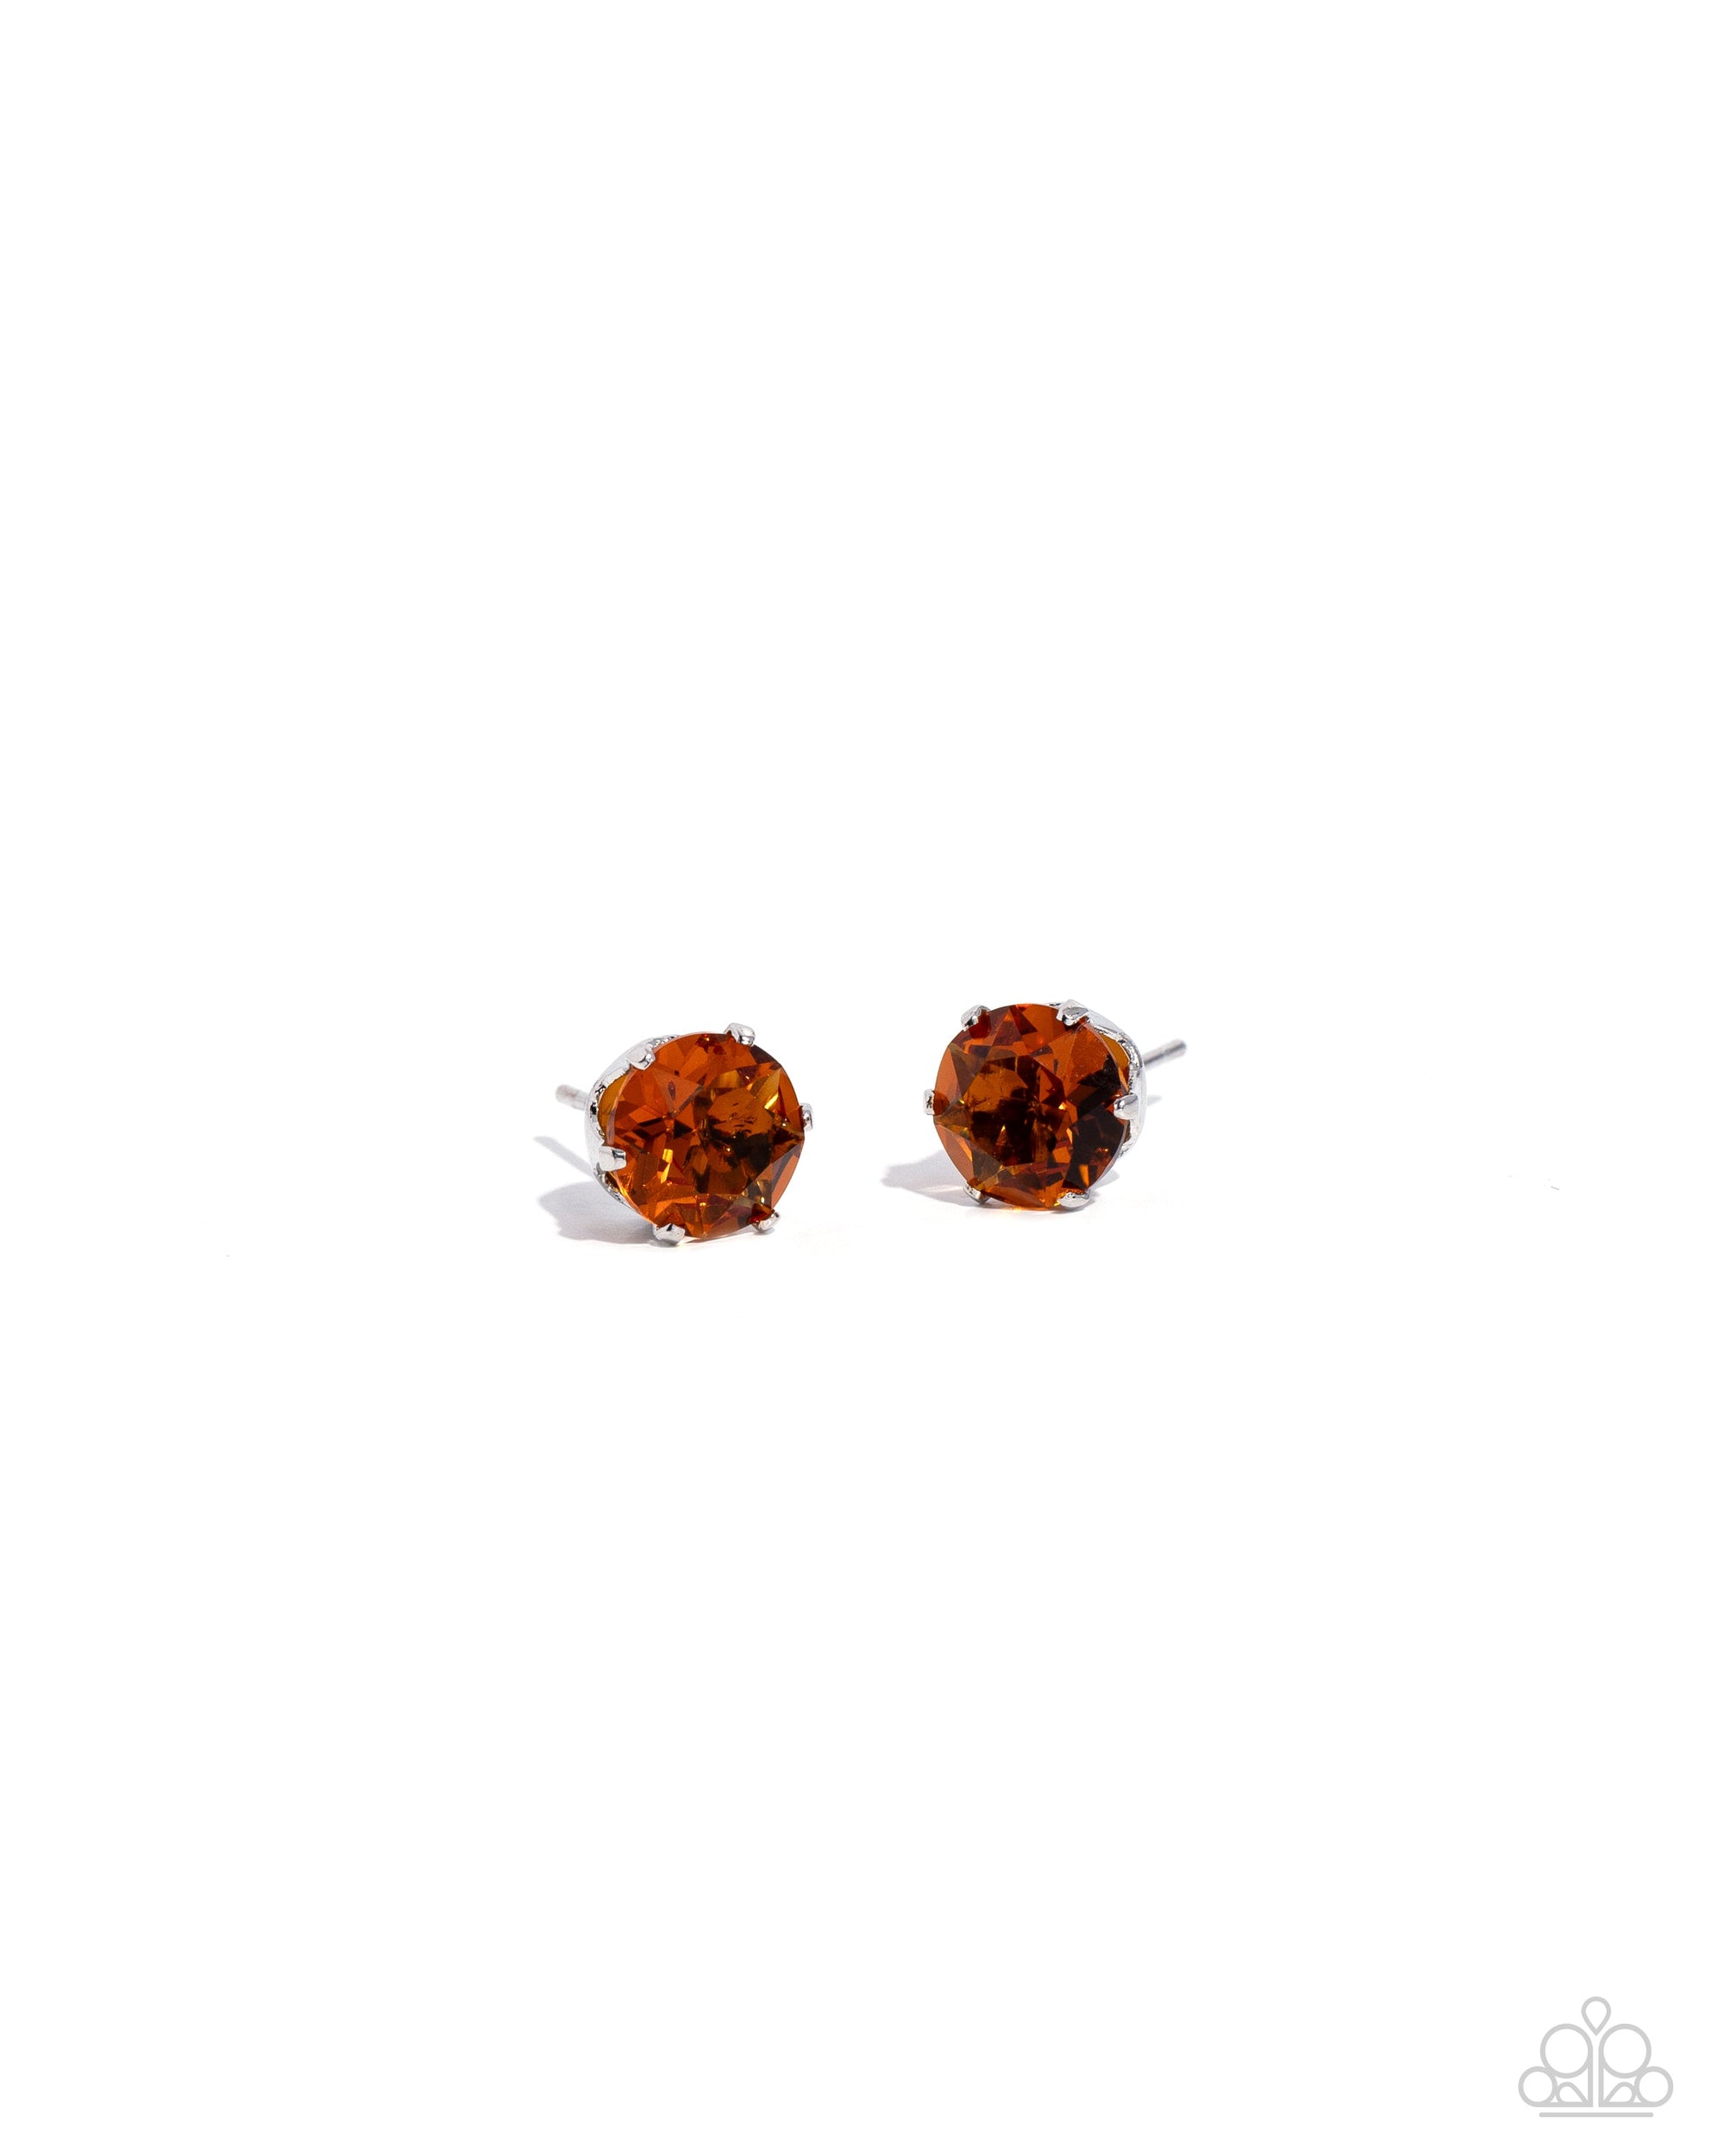 Breathtaking Birthstone (November) Topaz Orange Rhinestone Earrings - Paparazzi Accessories- lightbox - CarasShop.com - $5 Jewelry by Cara Jewels